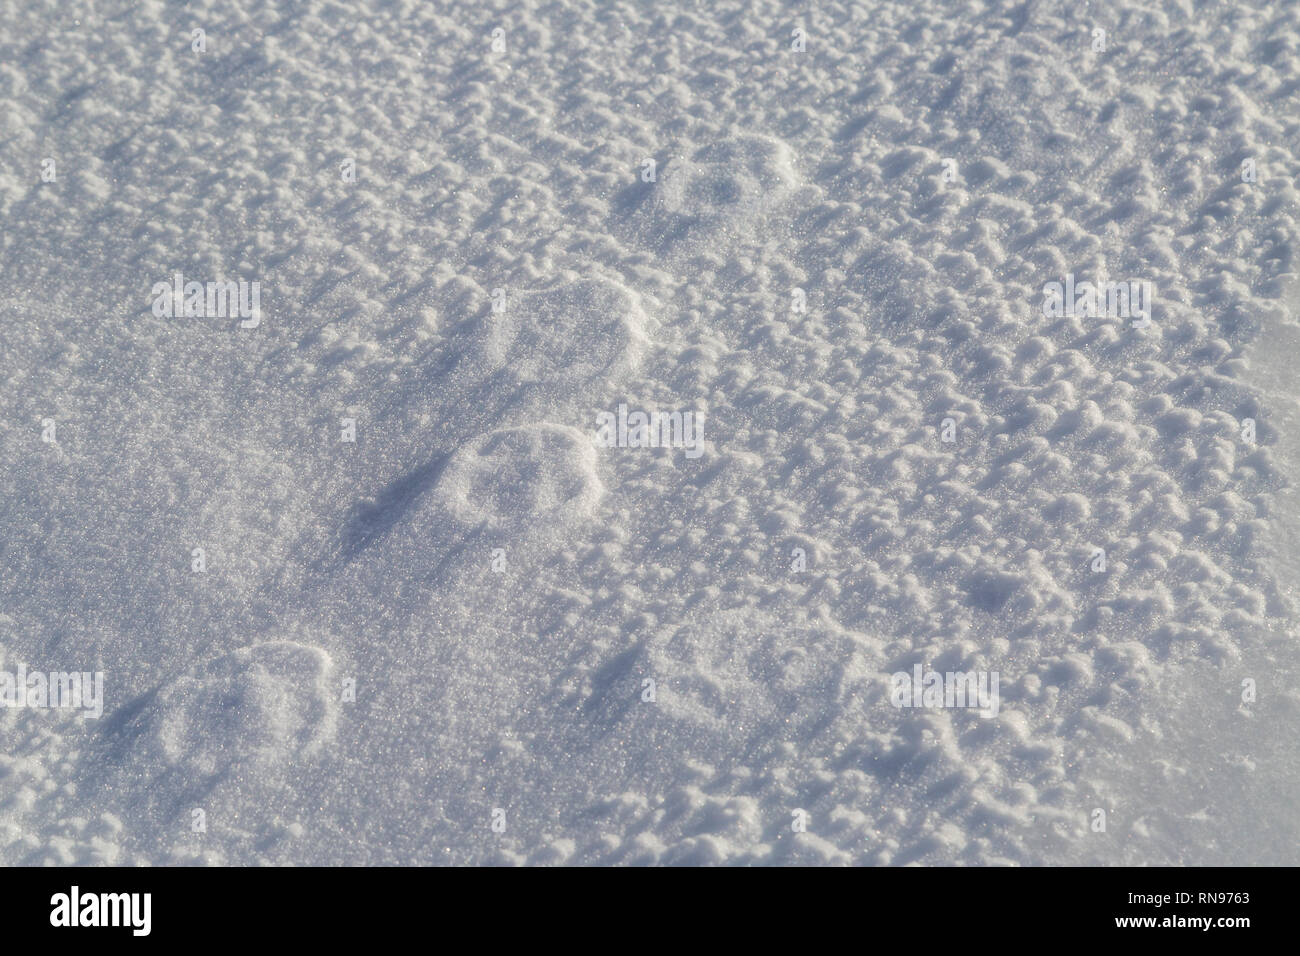 Paw print tracks of a lone animal walking across the snow Stock Photo